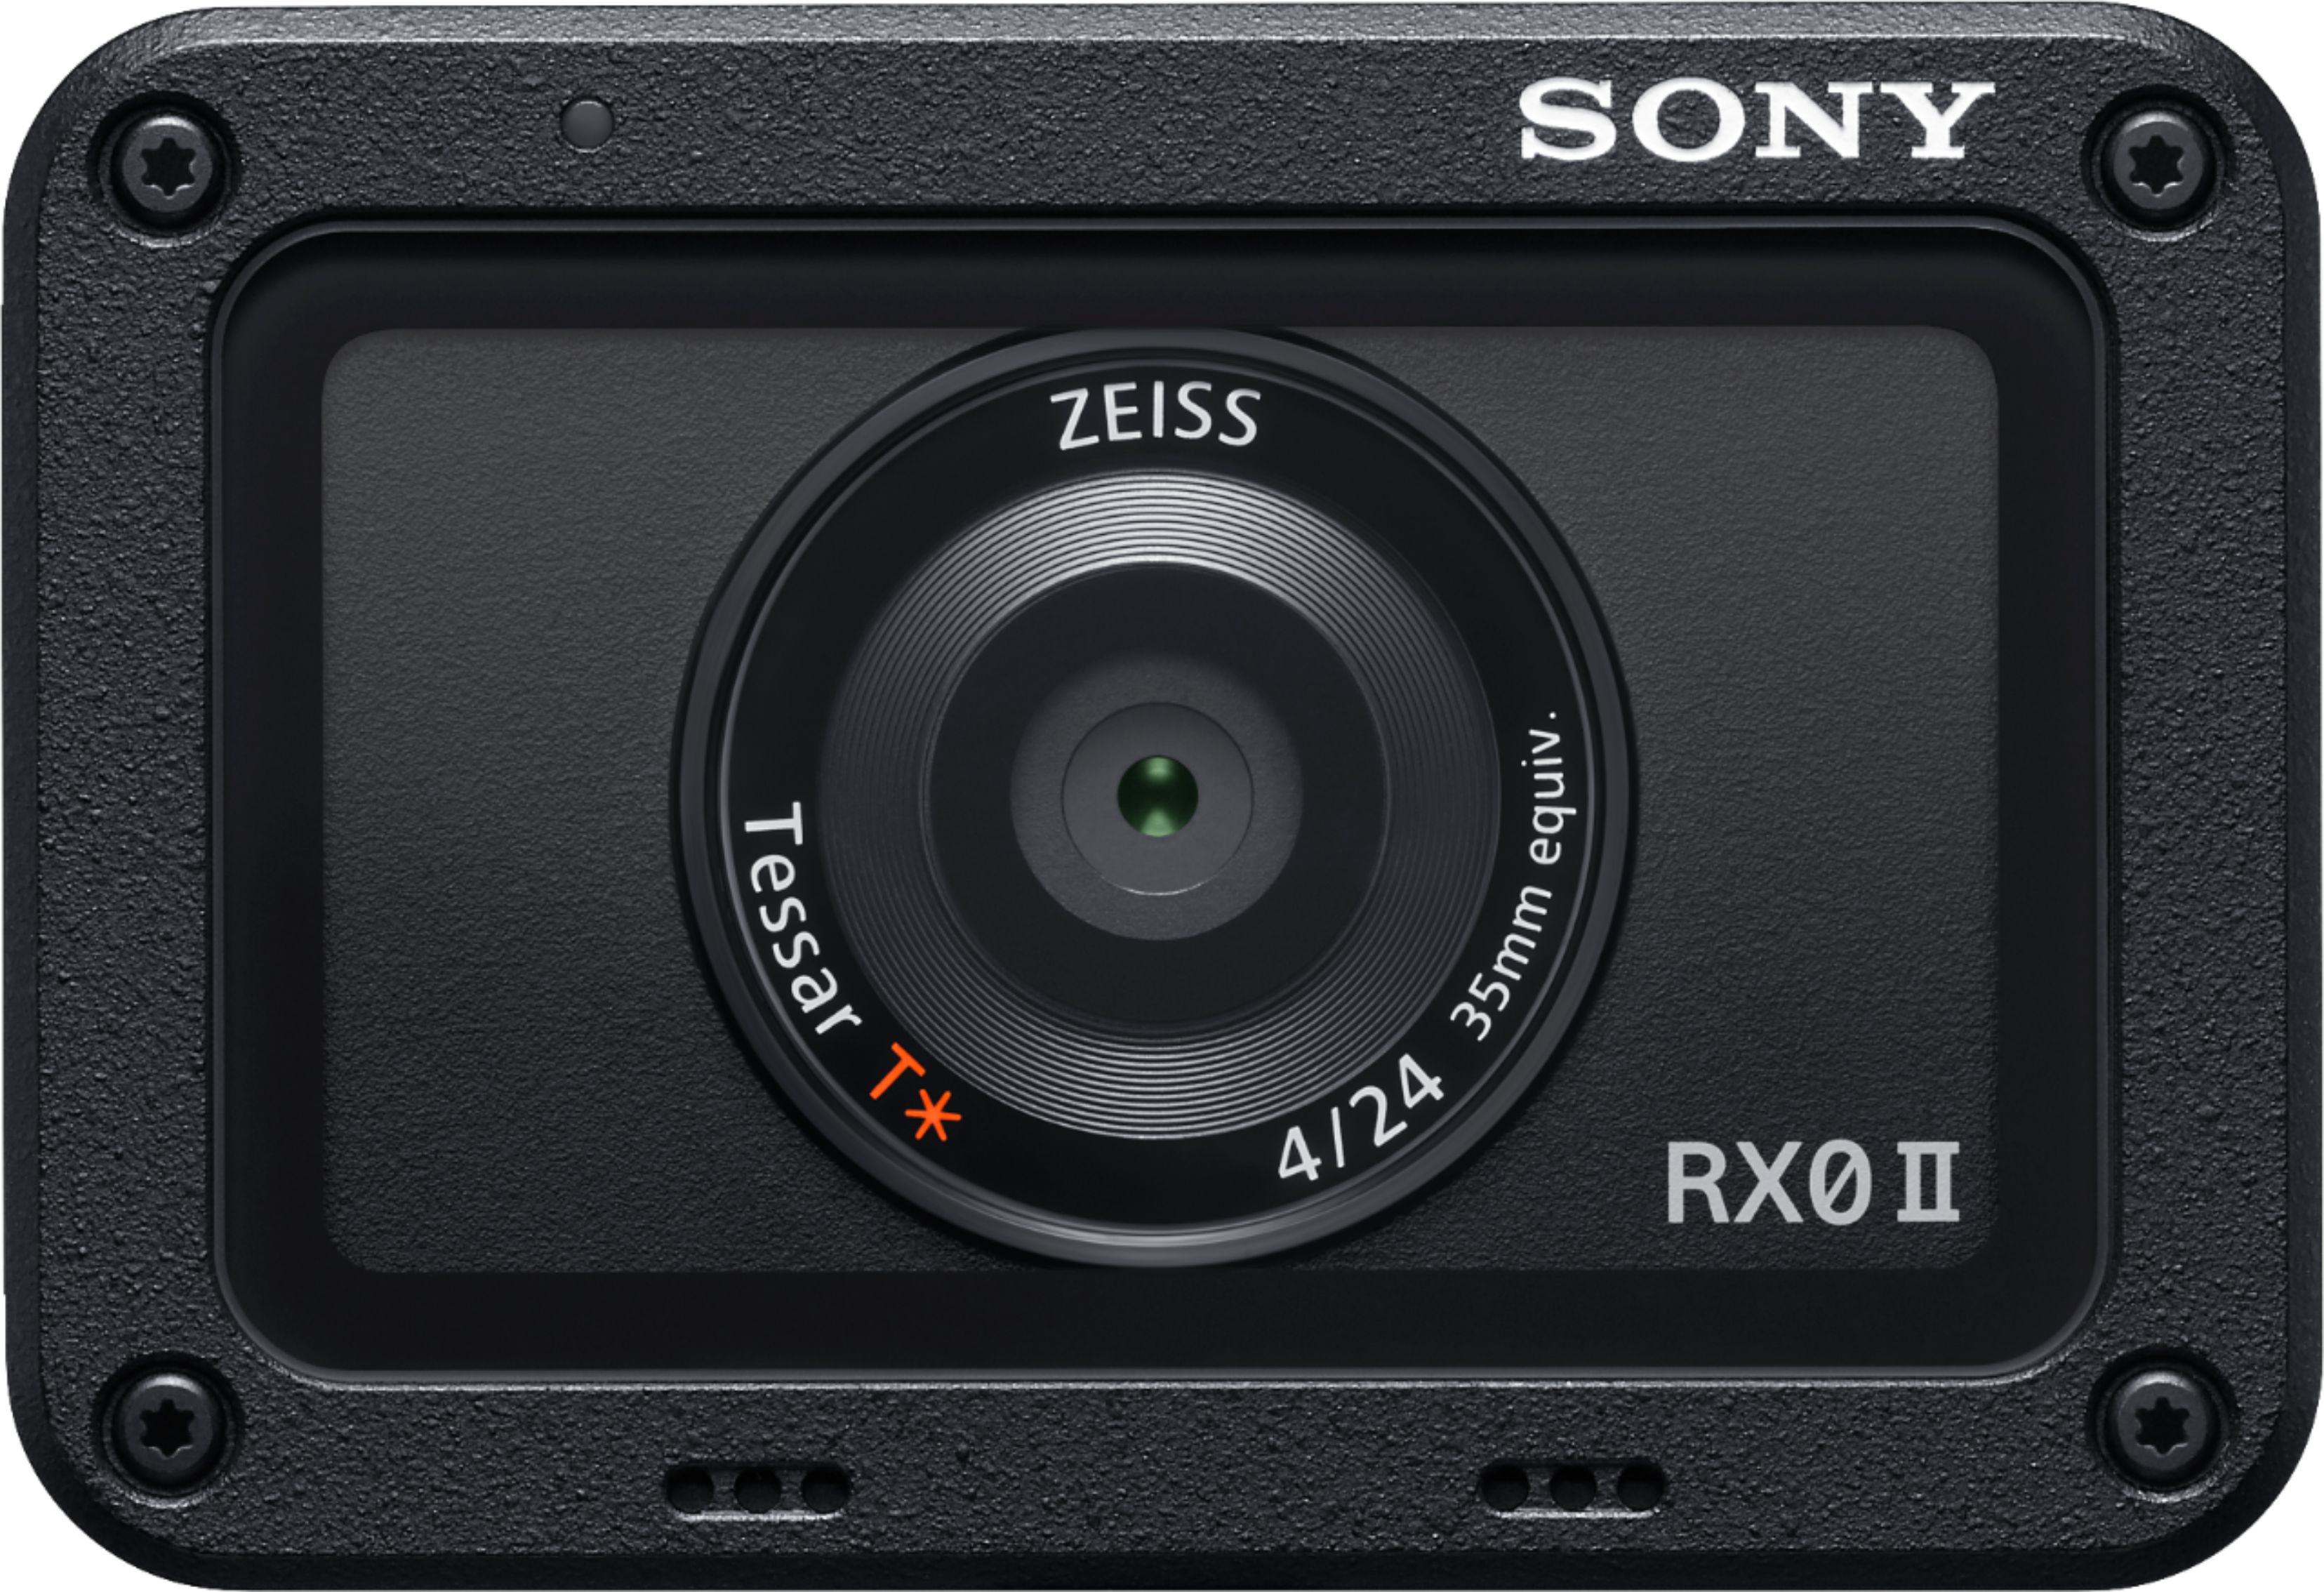 nickel Go up Shrug shoulders Sony RX0 II 15.3-Megapixel Digital Camera Black DSCRX0M2/B - Best Buy